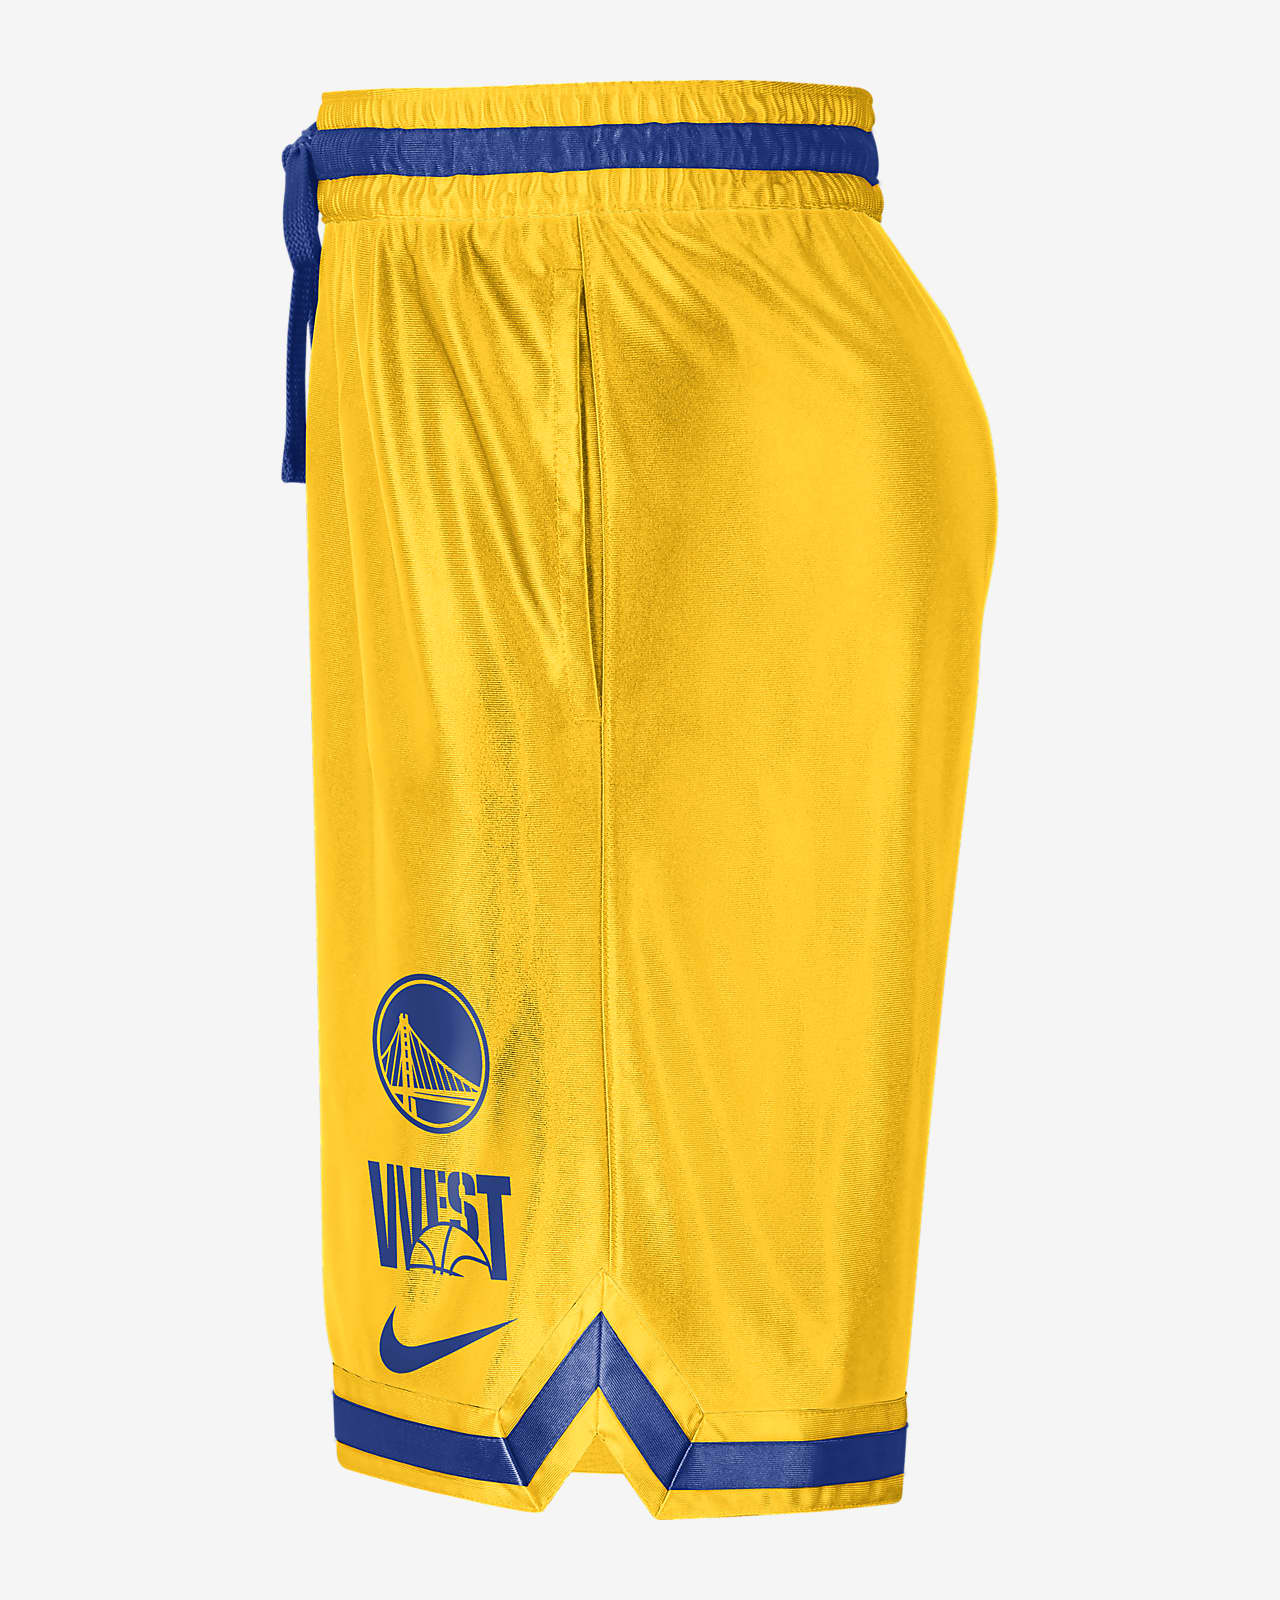 Golden State Warriors Icon Practice Men's Nike Dri-FIT NBA Shorts